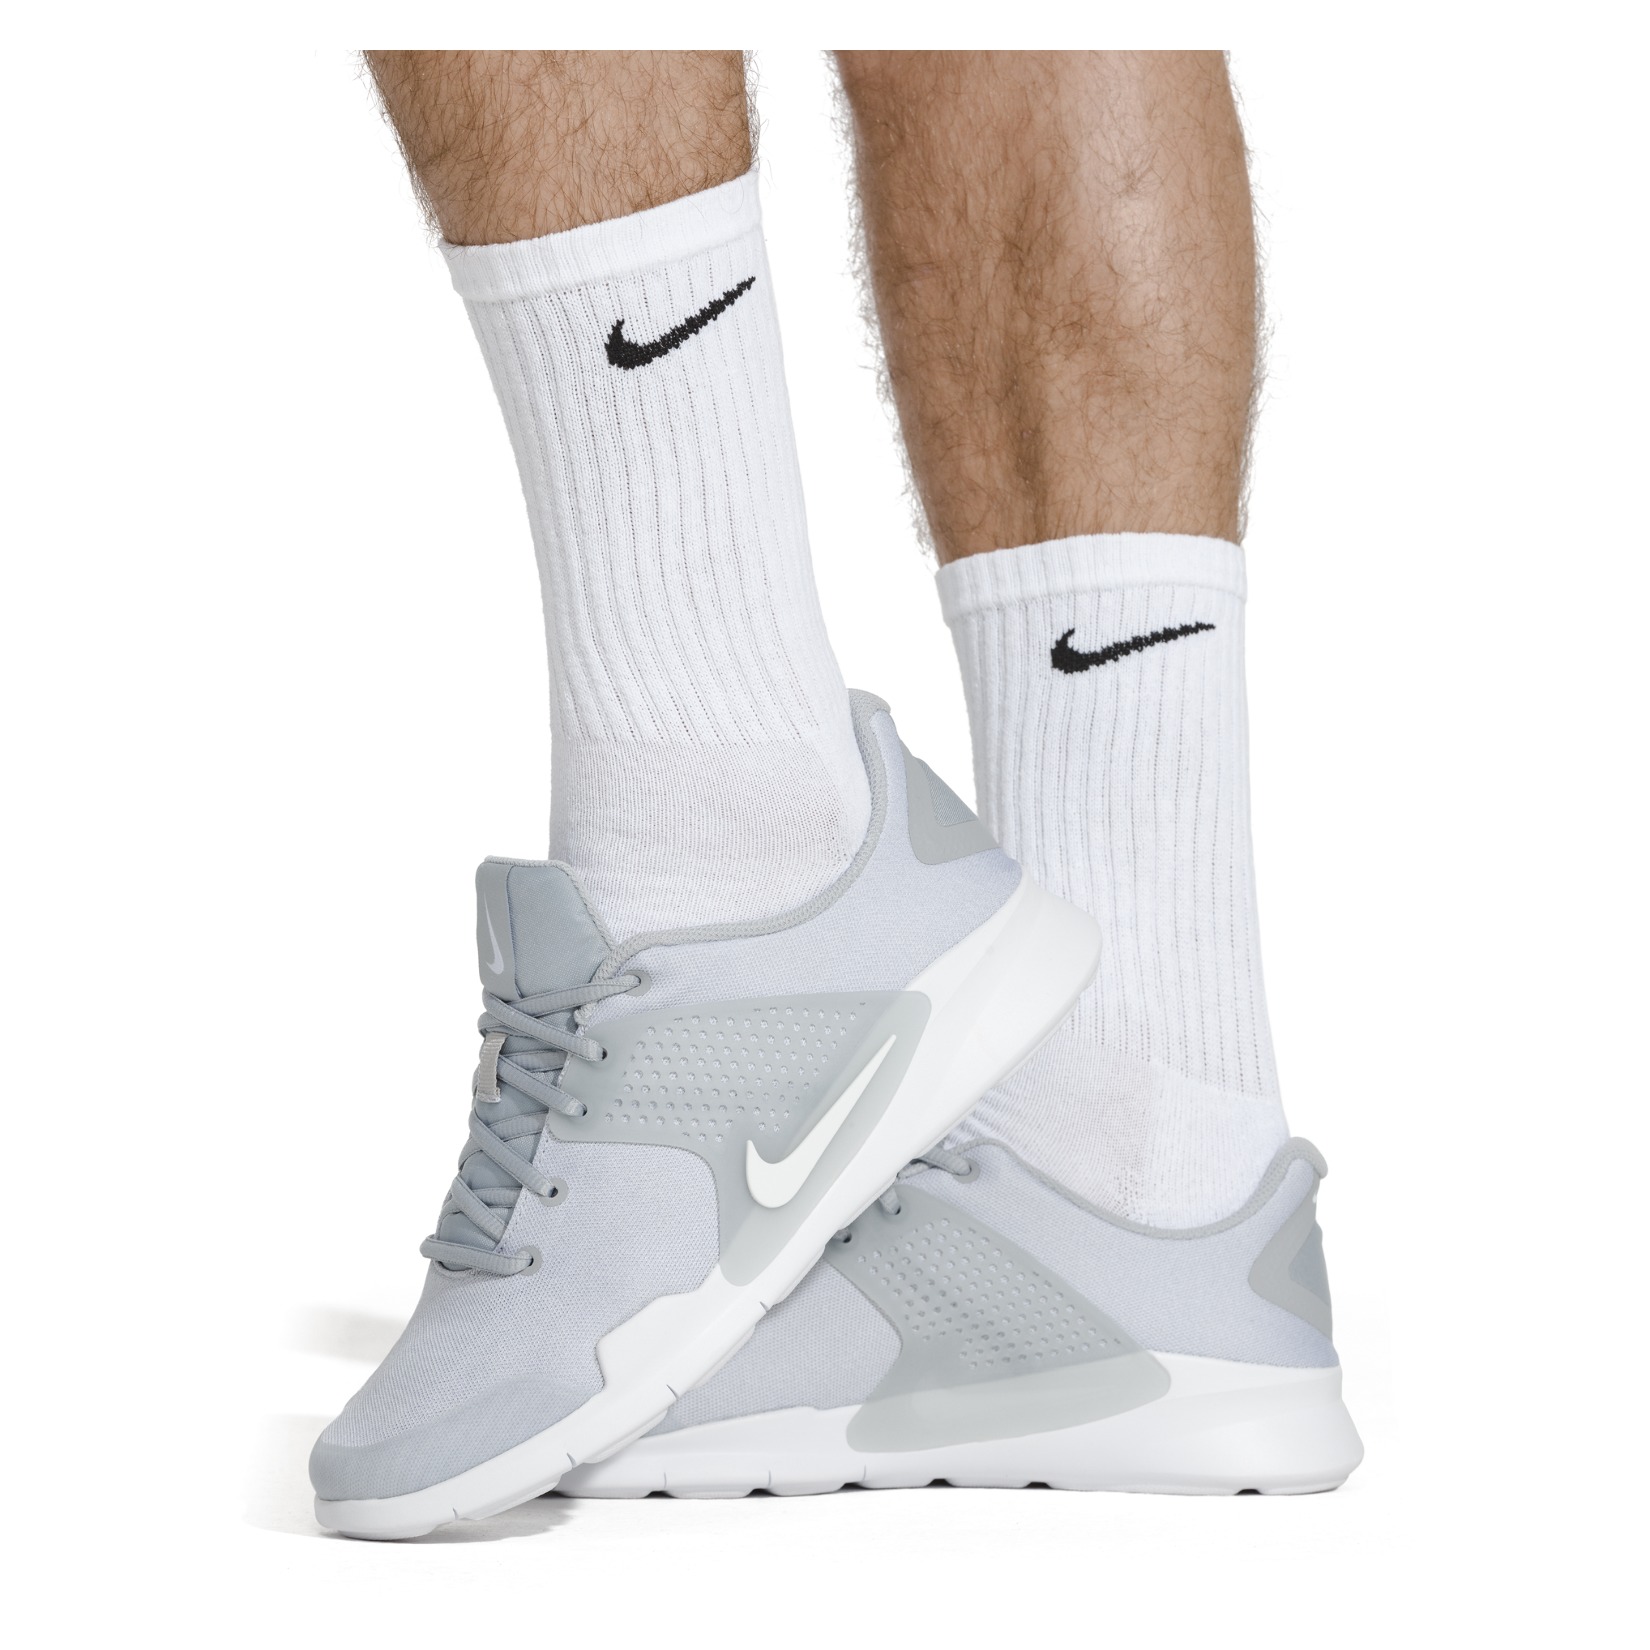 Nike Everyday Cushioned Training Crew Socks (6 Pairs) White-Black